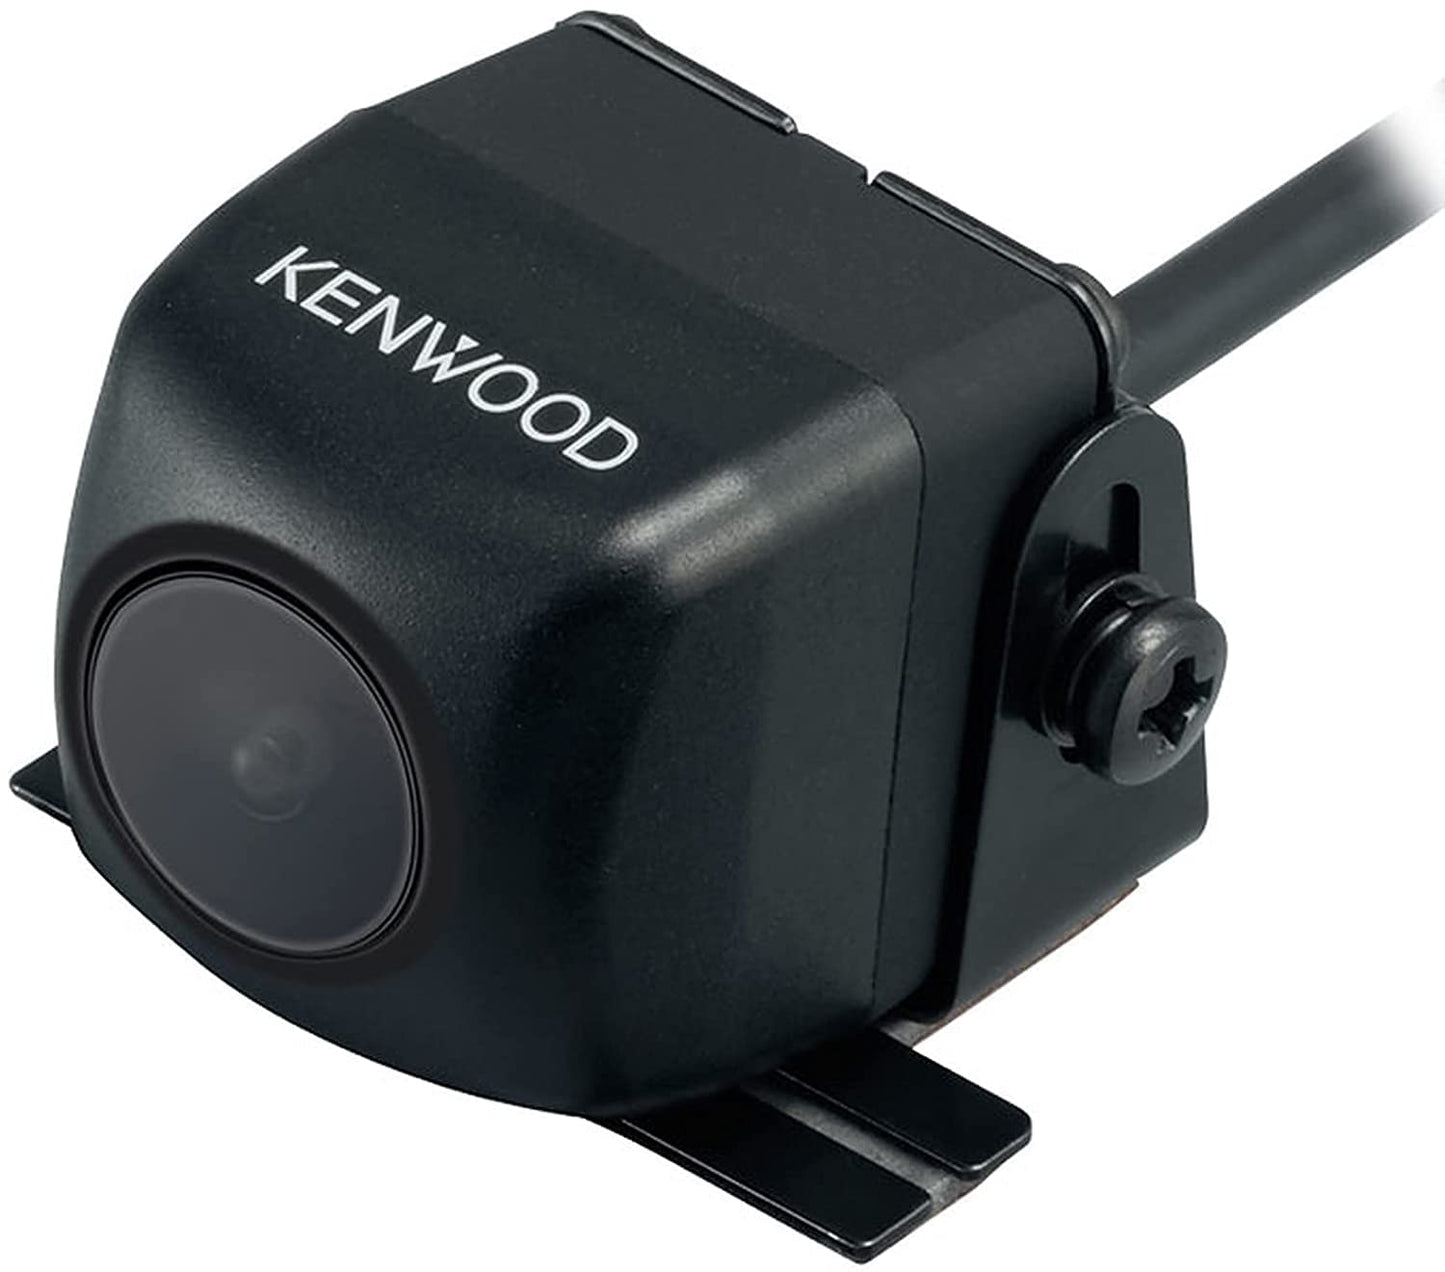 Kenwood DMX1037S 10.1" Floating Car Stereo + CMOS-230 Backup Camera